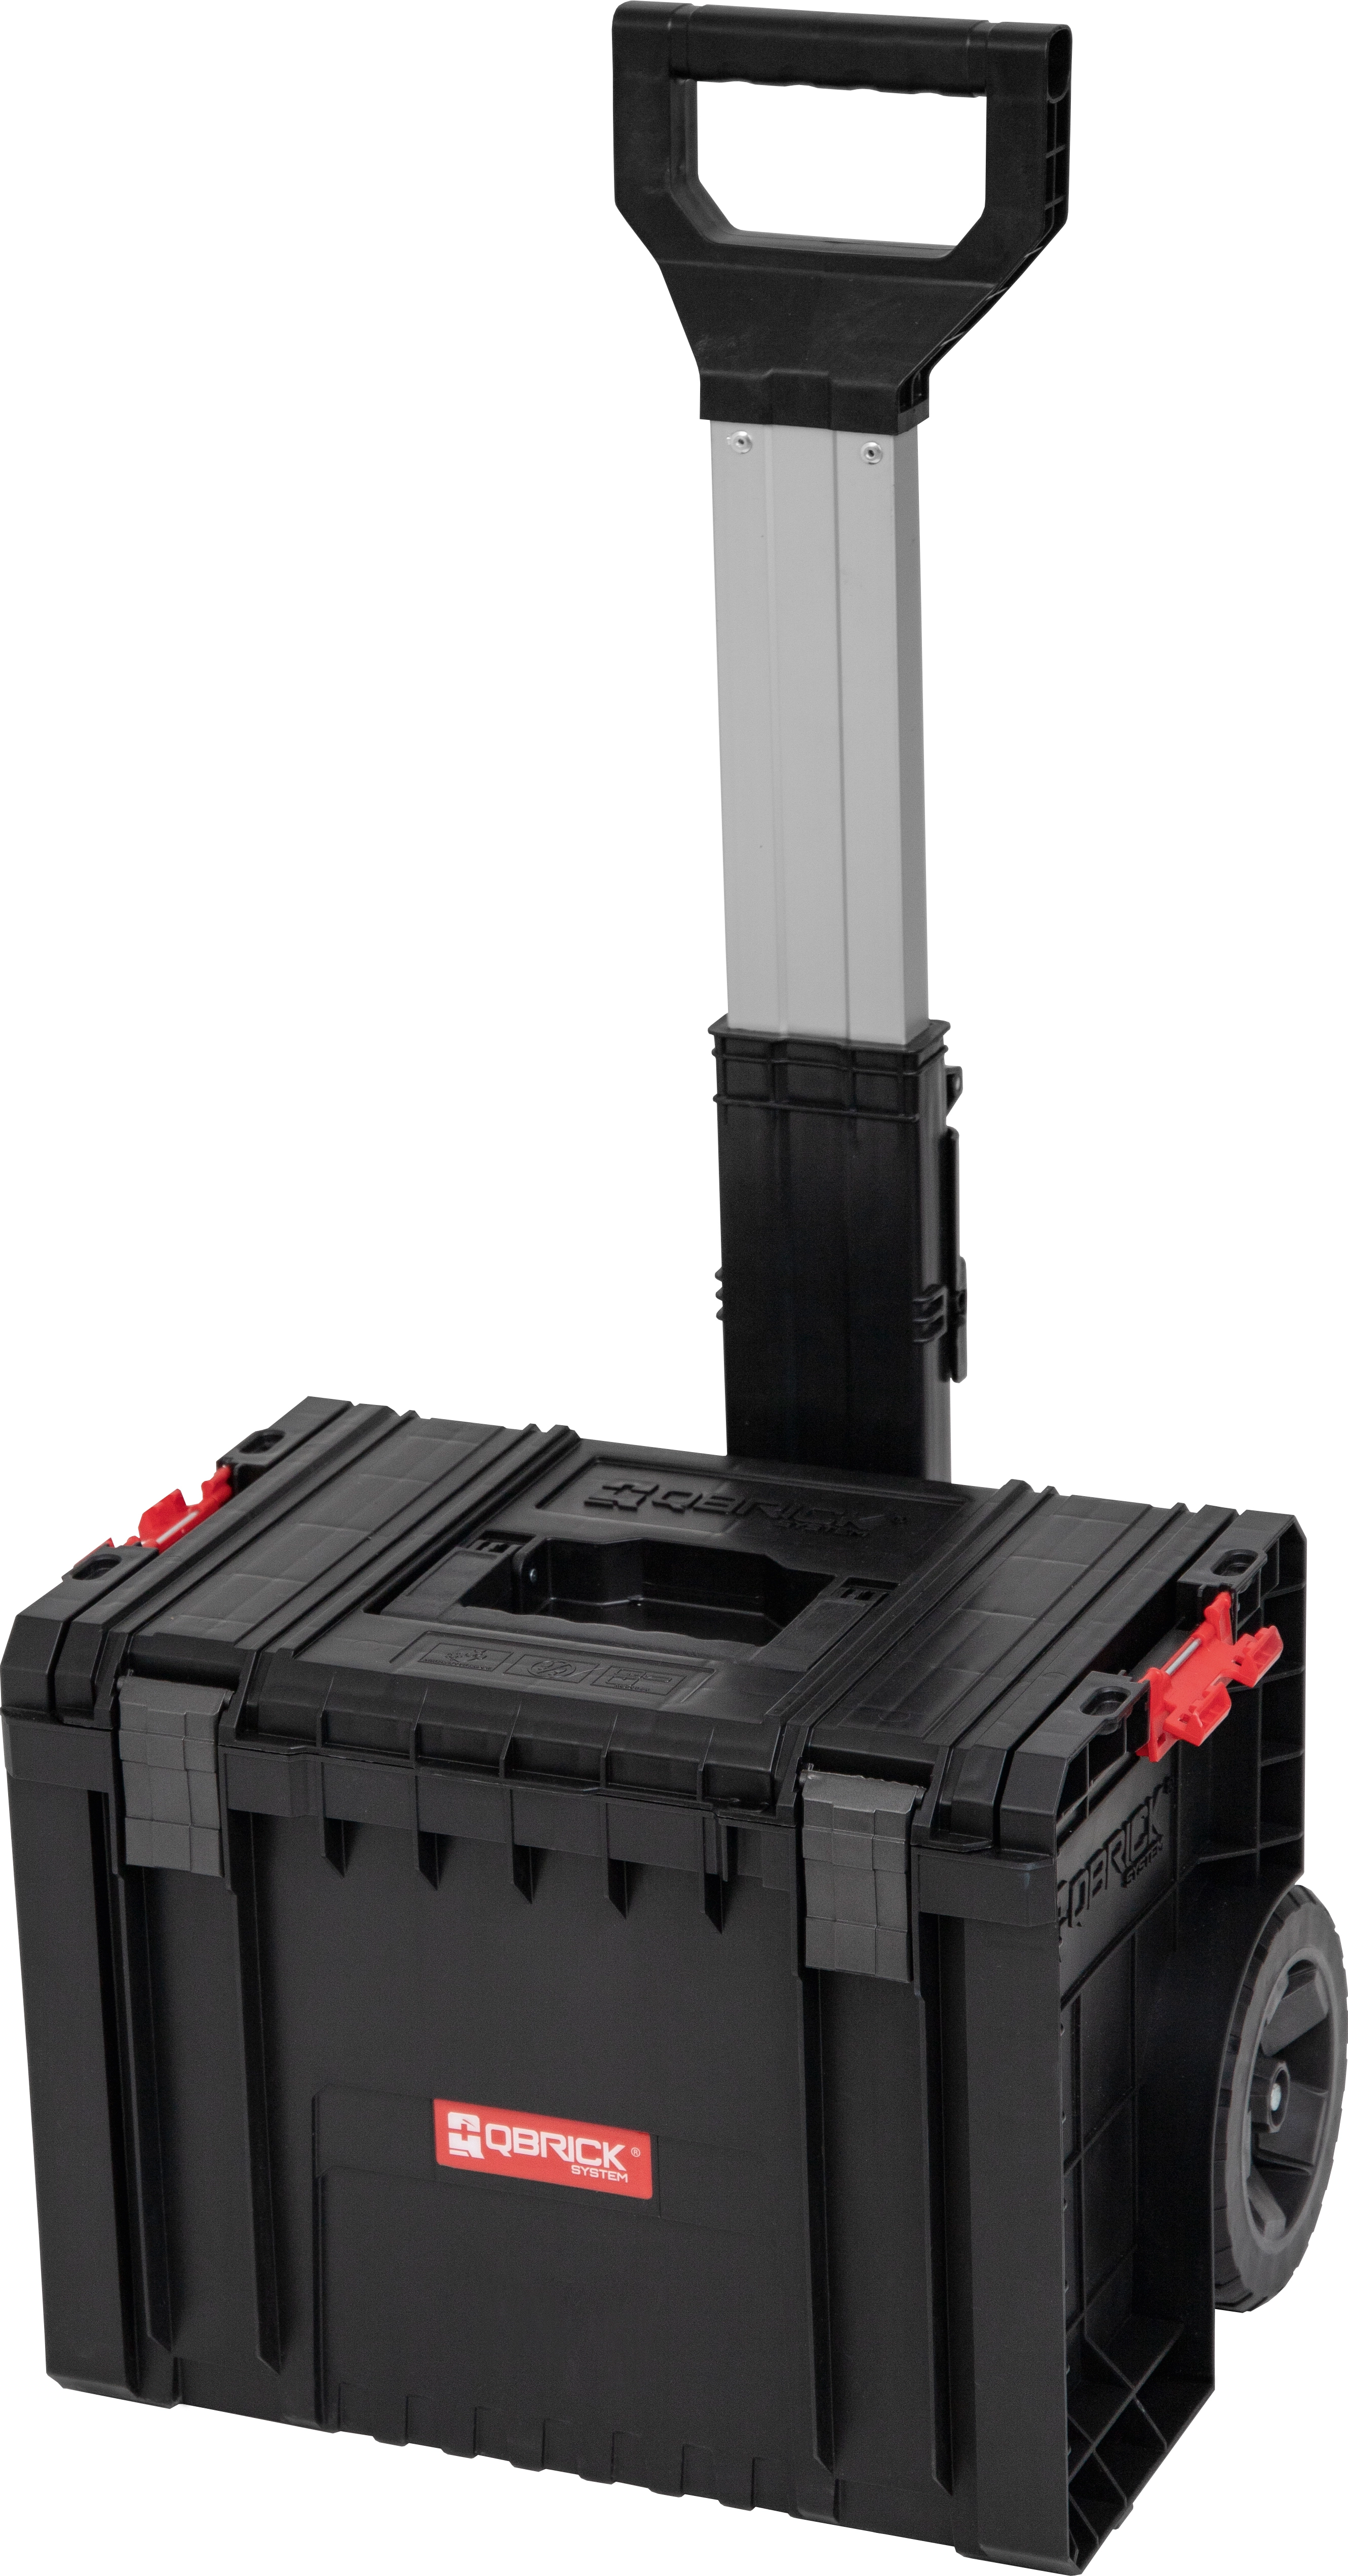 Qbrick System Pro Cart Werkzeugbox 69 cm x 45 cm x 39 cm kaufen bei OBI